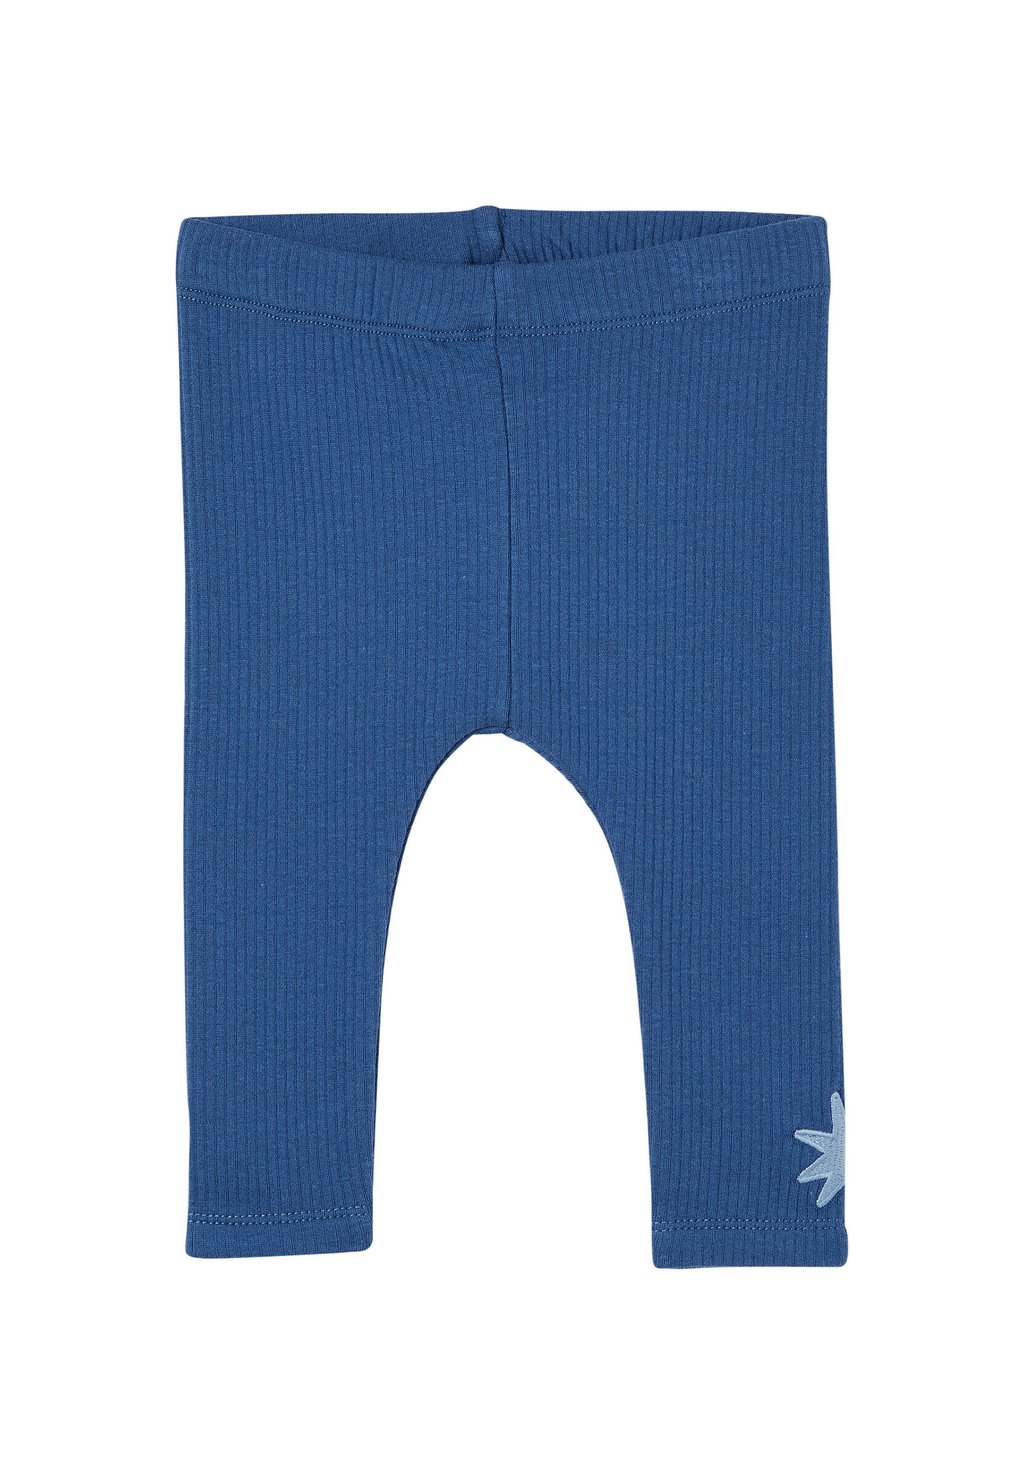 Леггинсы FREDDIE Cotton On, цвет petty blue wash леггинсы ultra soft pocket cotton on body цвет blue